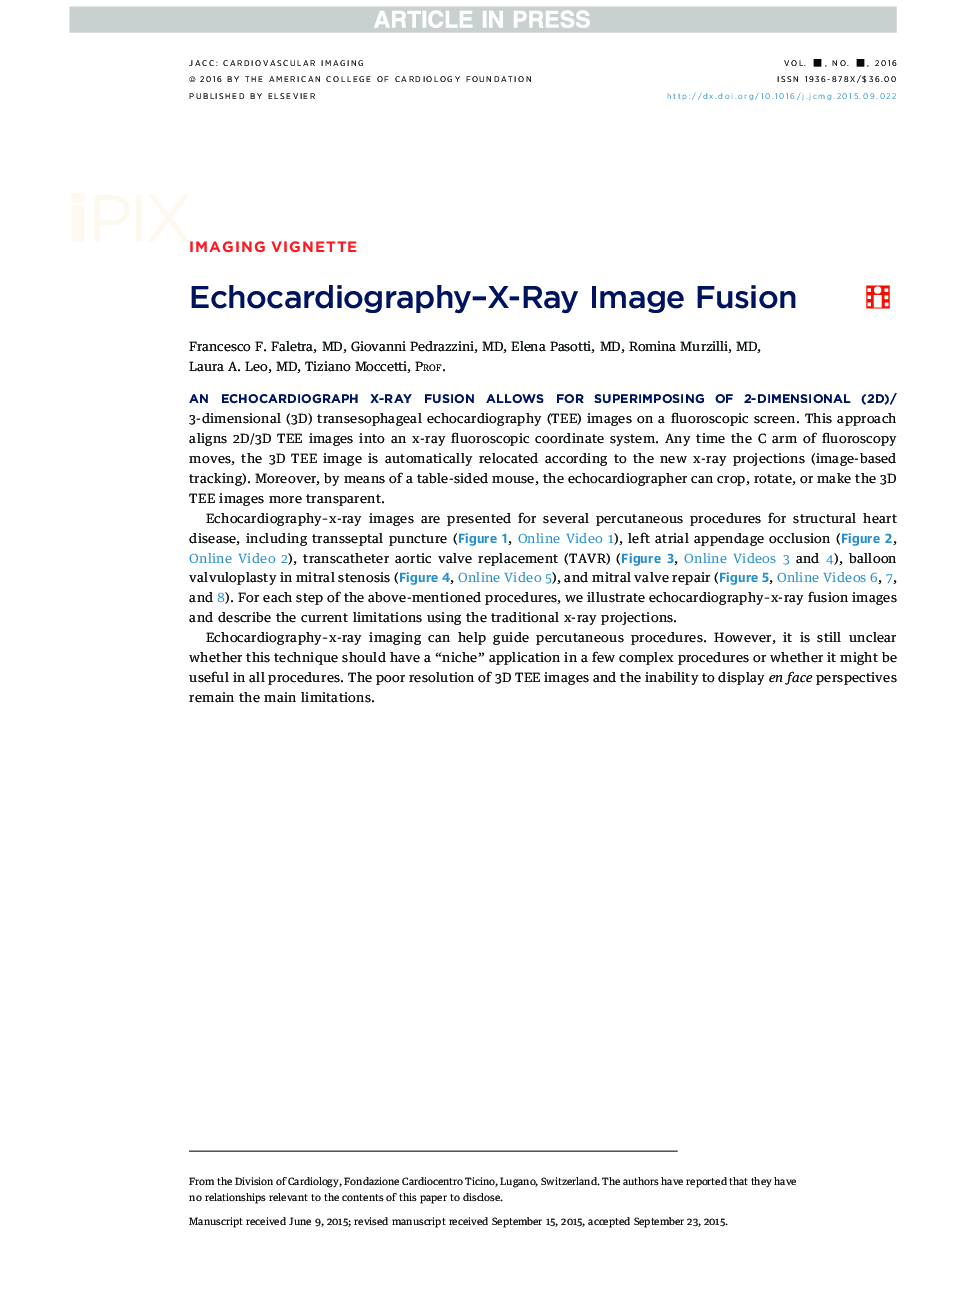 Echocardiography-X-Ray Image Fusion